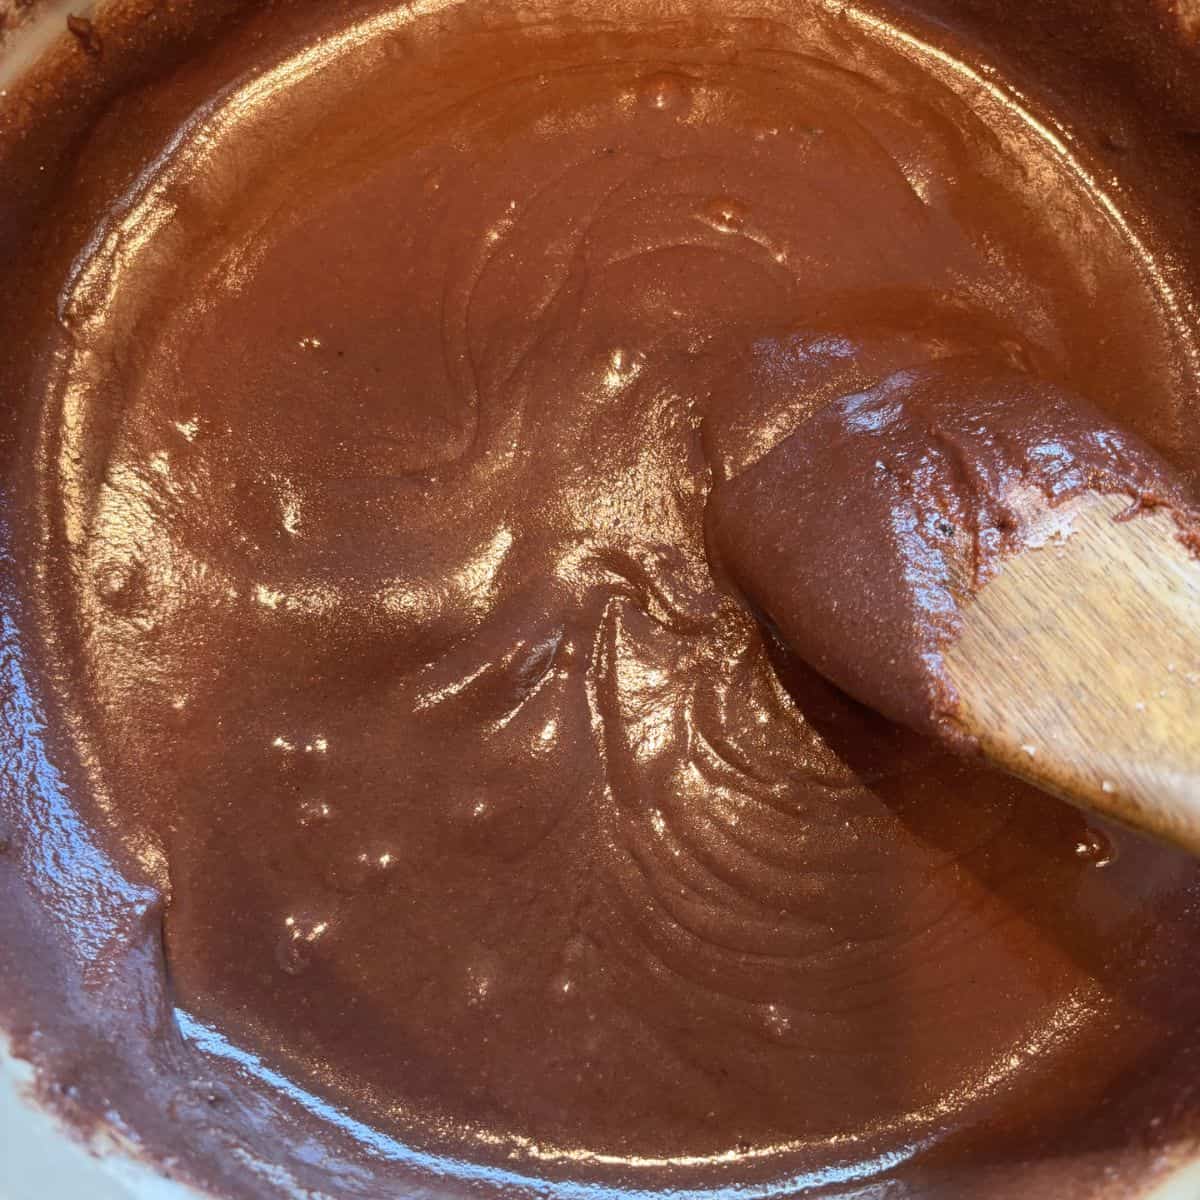 Stirring fudge mixture in pan with wooden spoon.